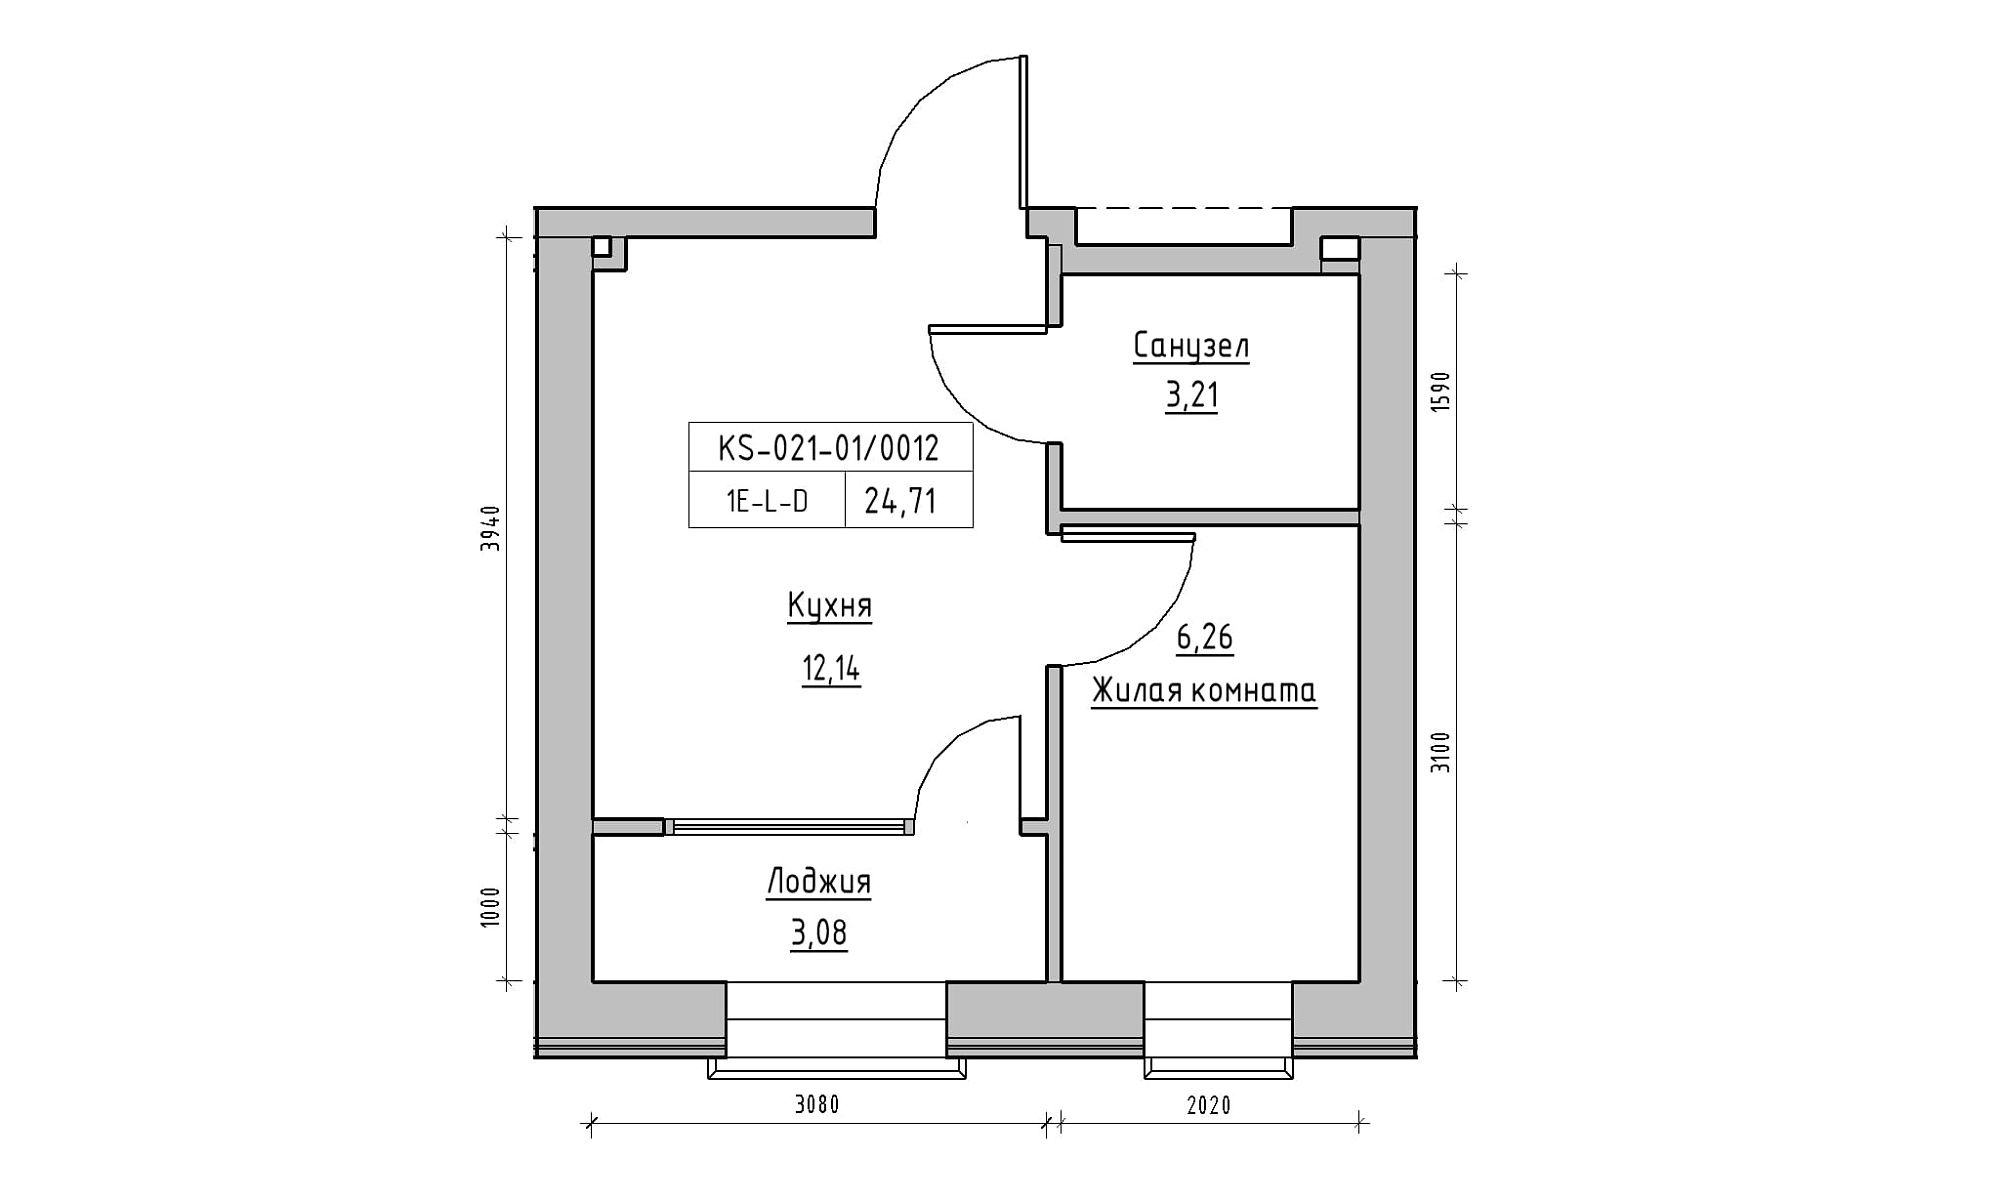 Planning 1-rm flats area 24.71m2, KS-021-01/0012.